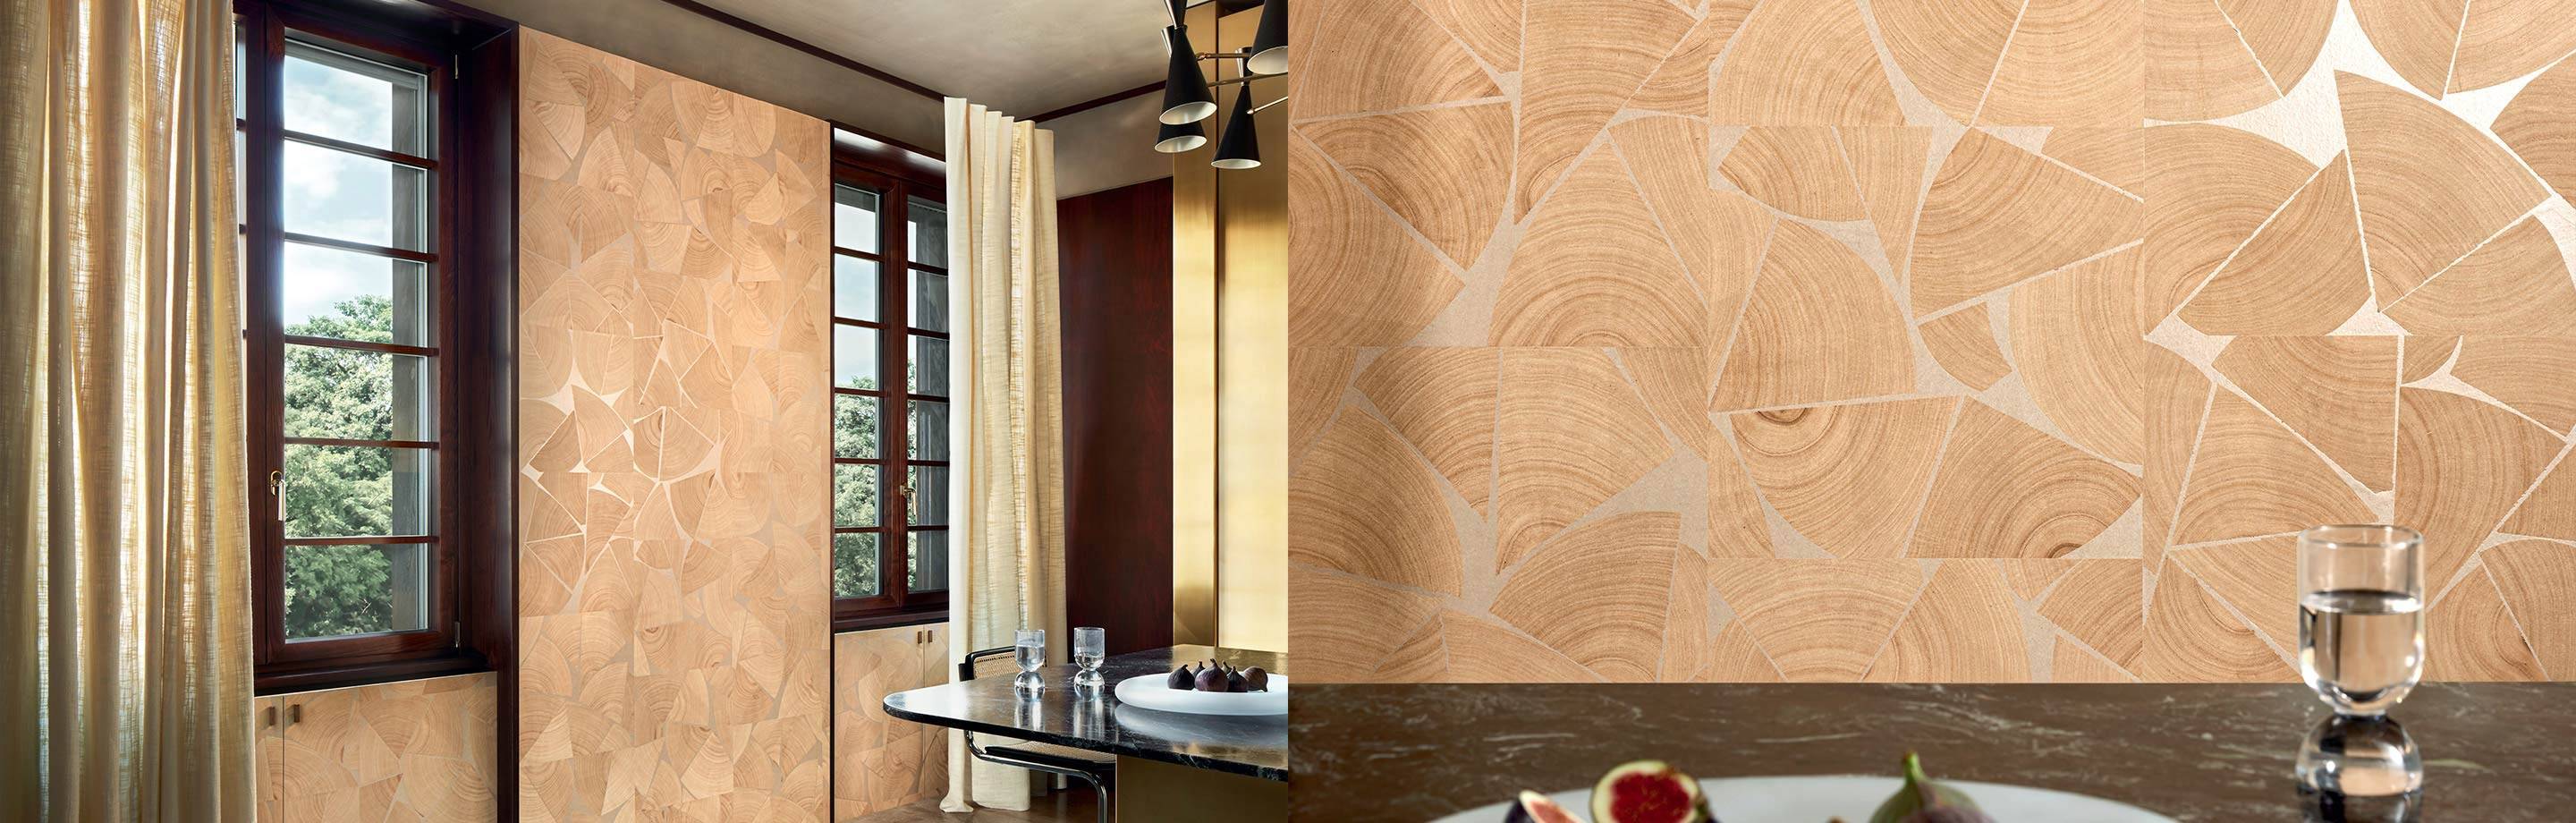 Elitis Dryades RM 428 70. Walnut burl wood composite wallpaper